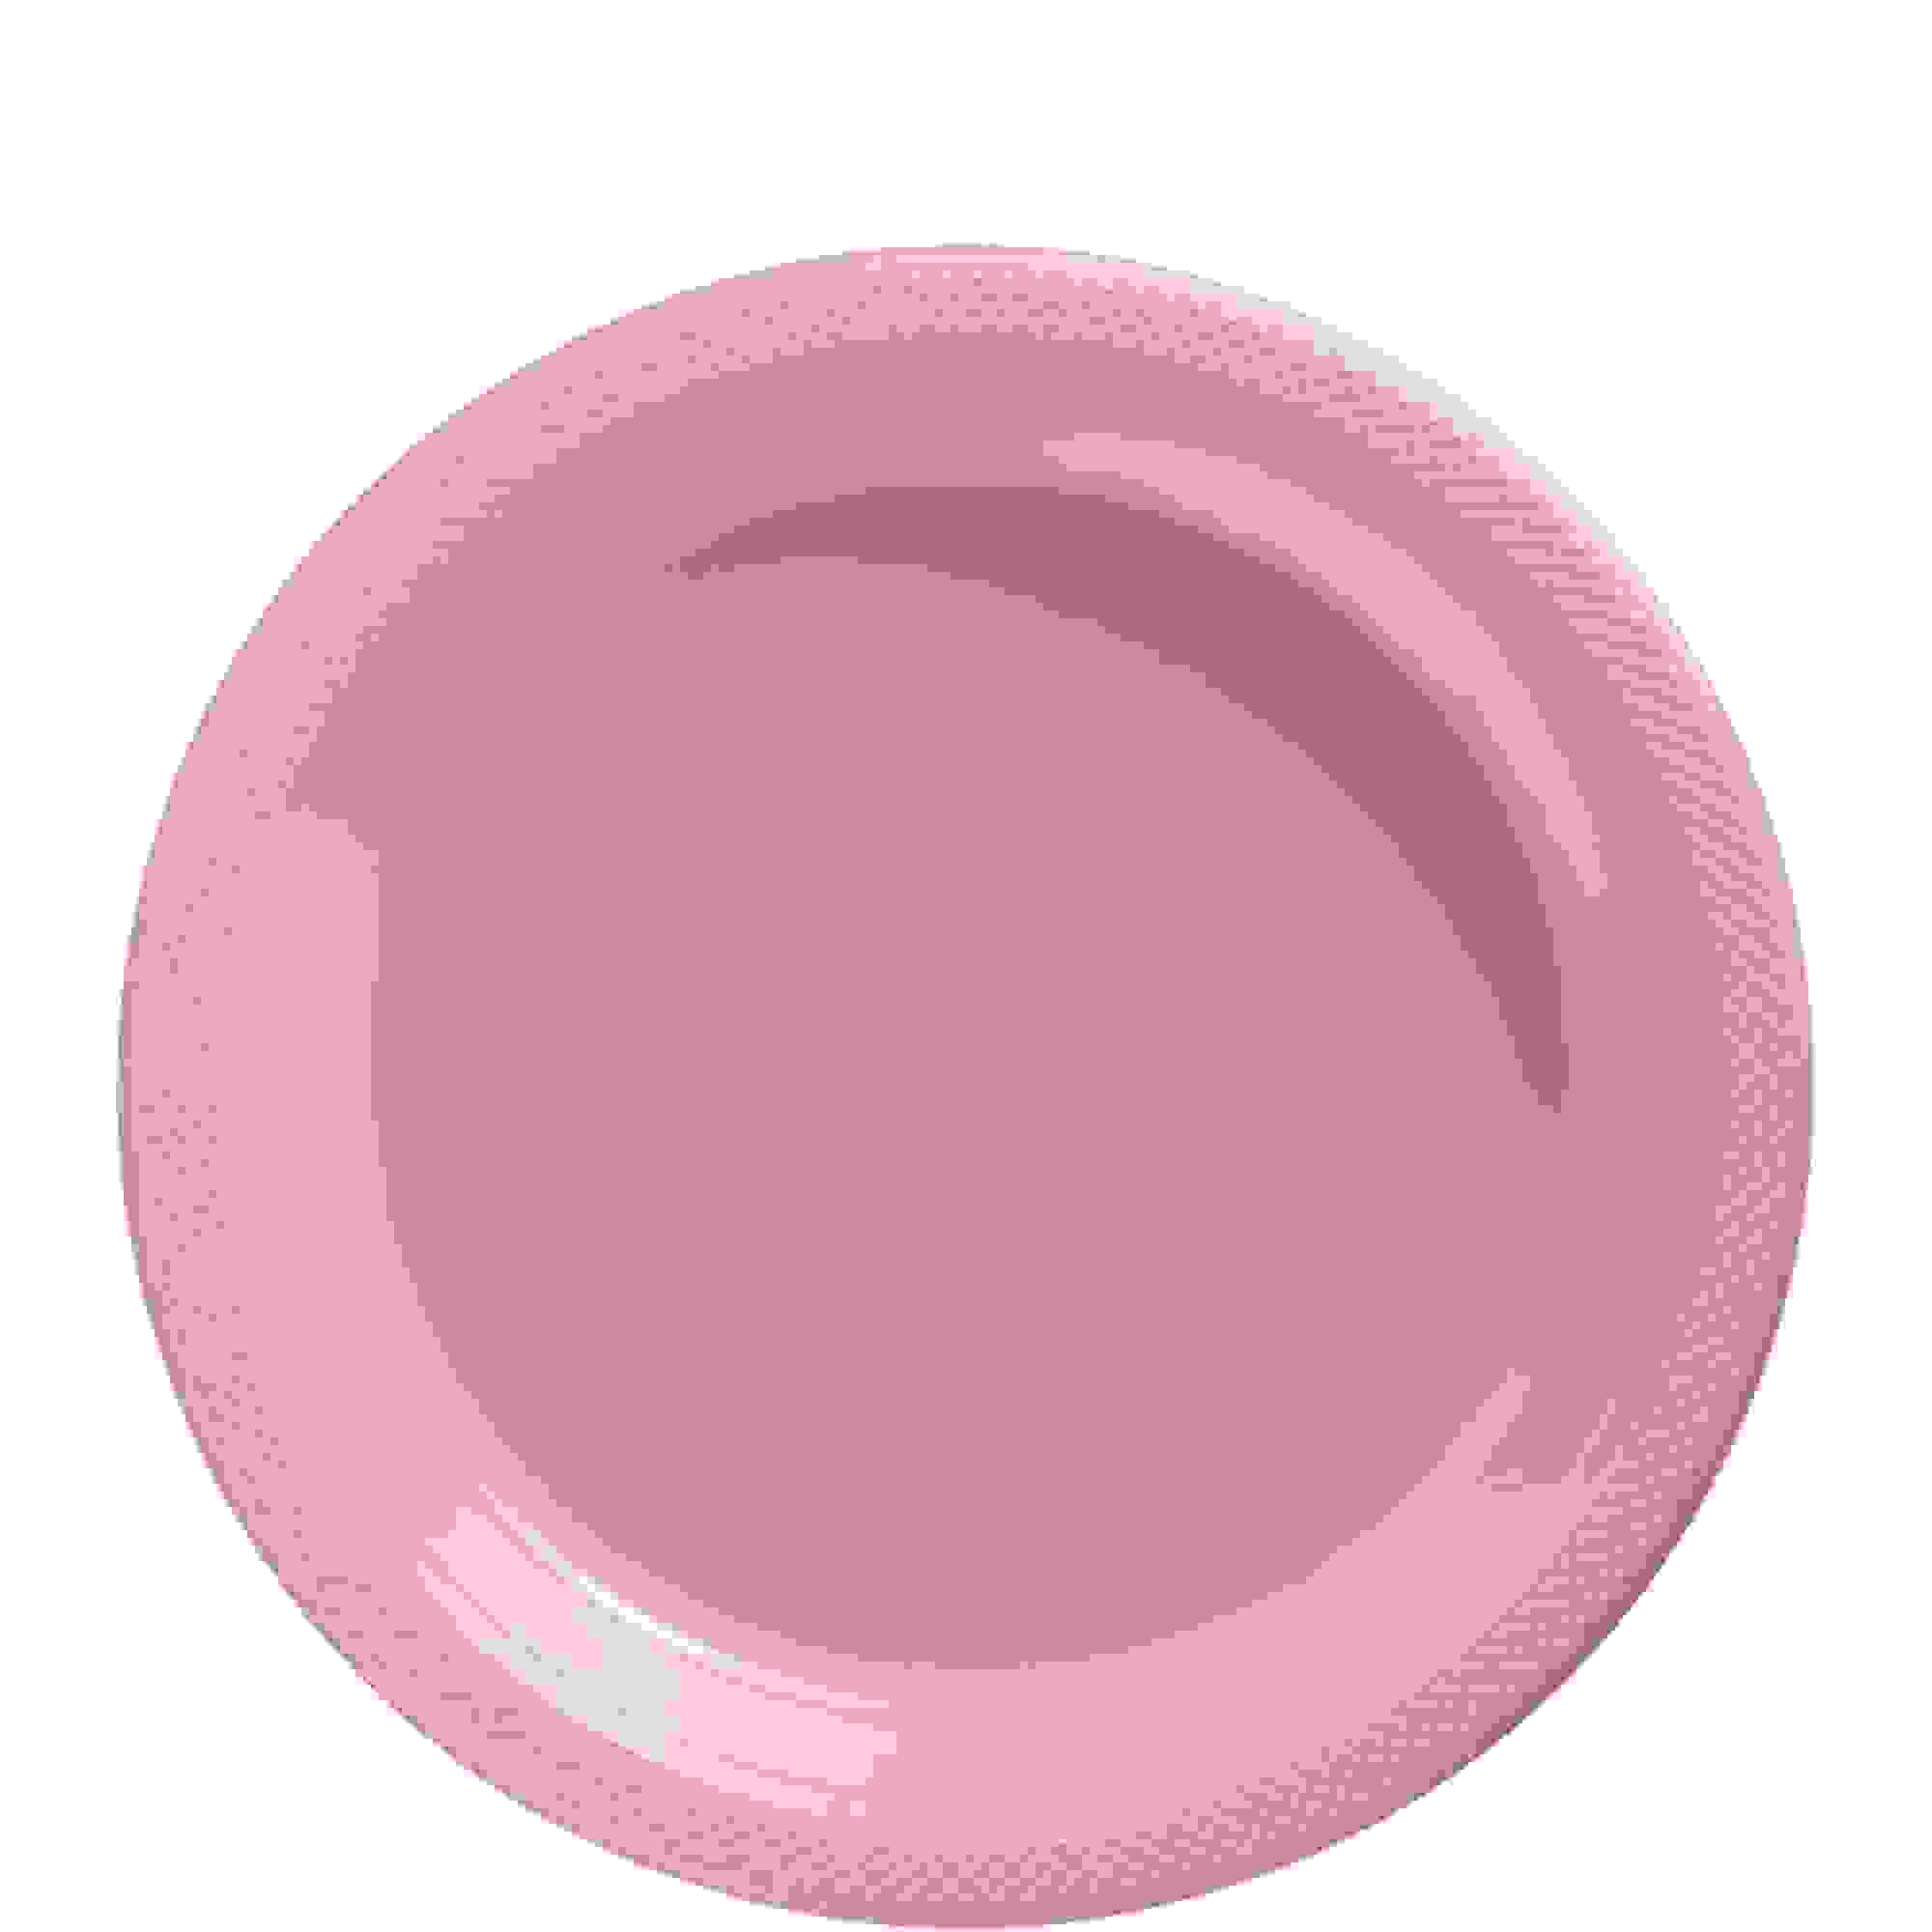 Pink Plastic Dessert Plates 20ct